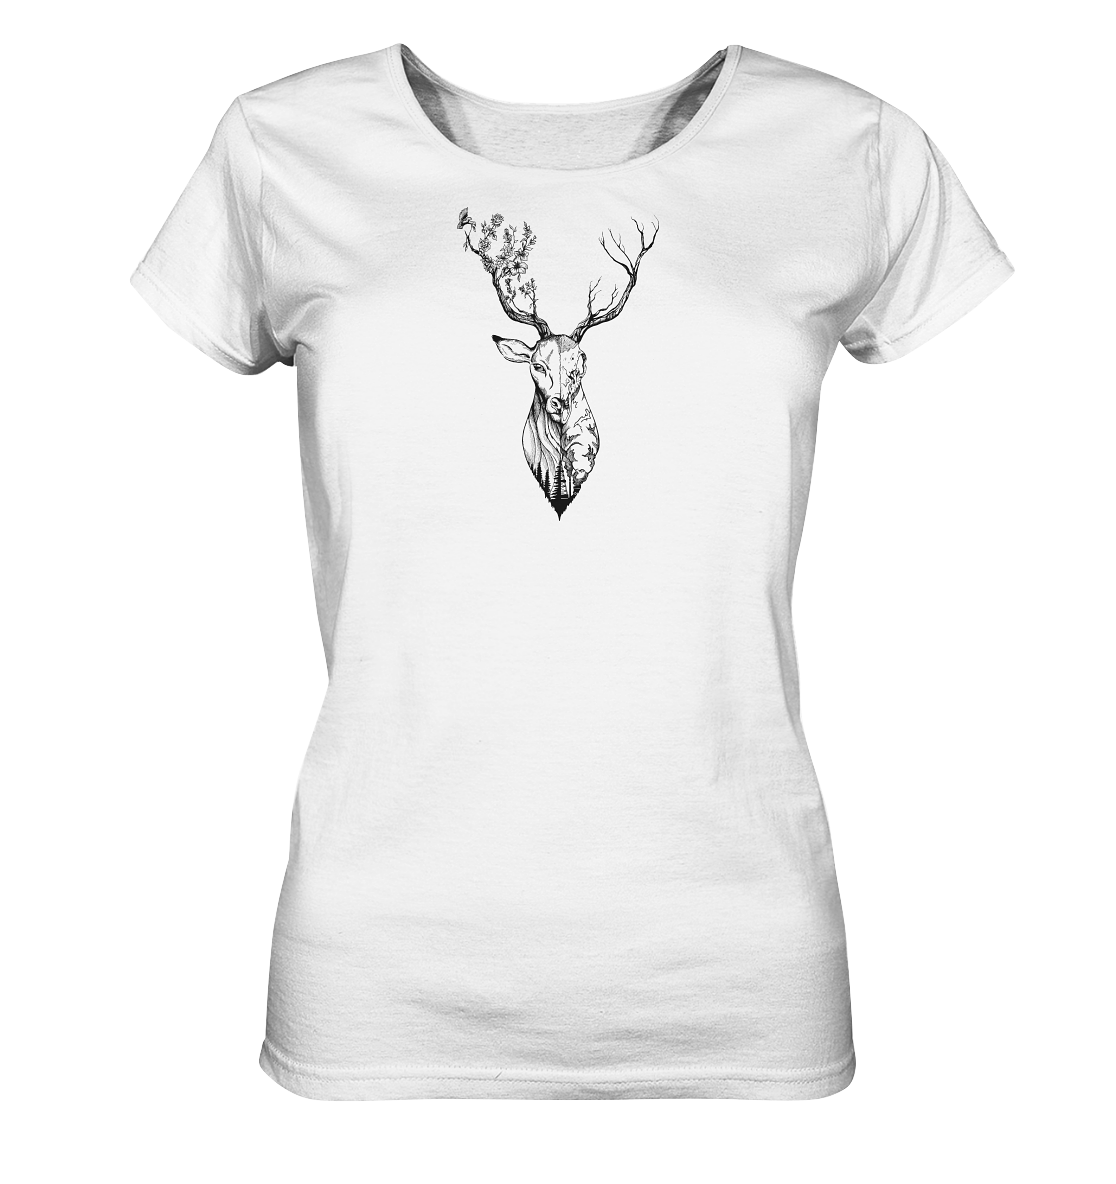 front-ladies-organic-shirt-f8f8f8-1116x-8.png